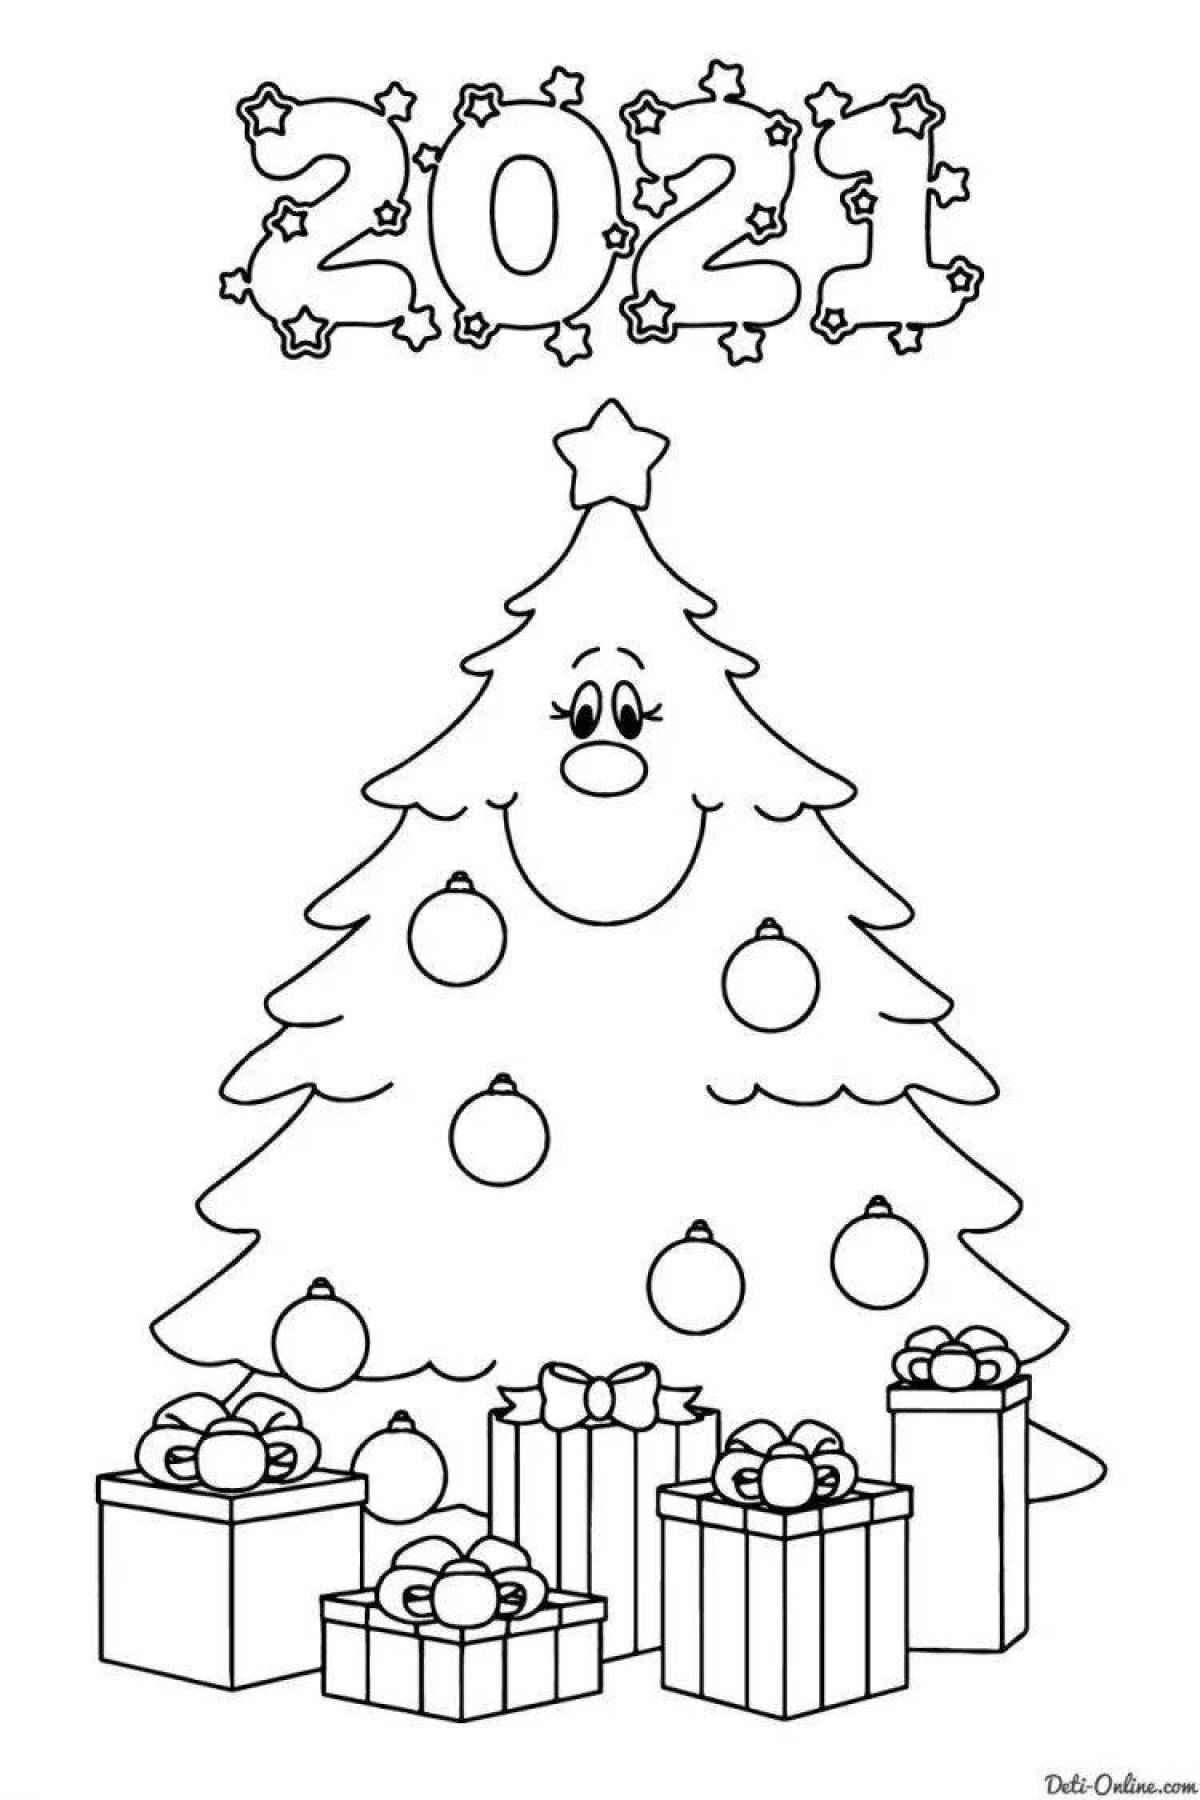 Gorgeous Christmas tree with toys